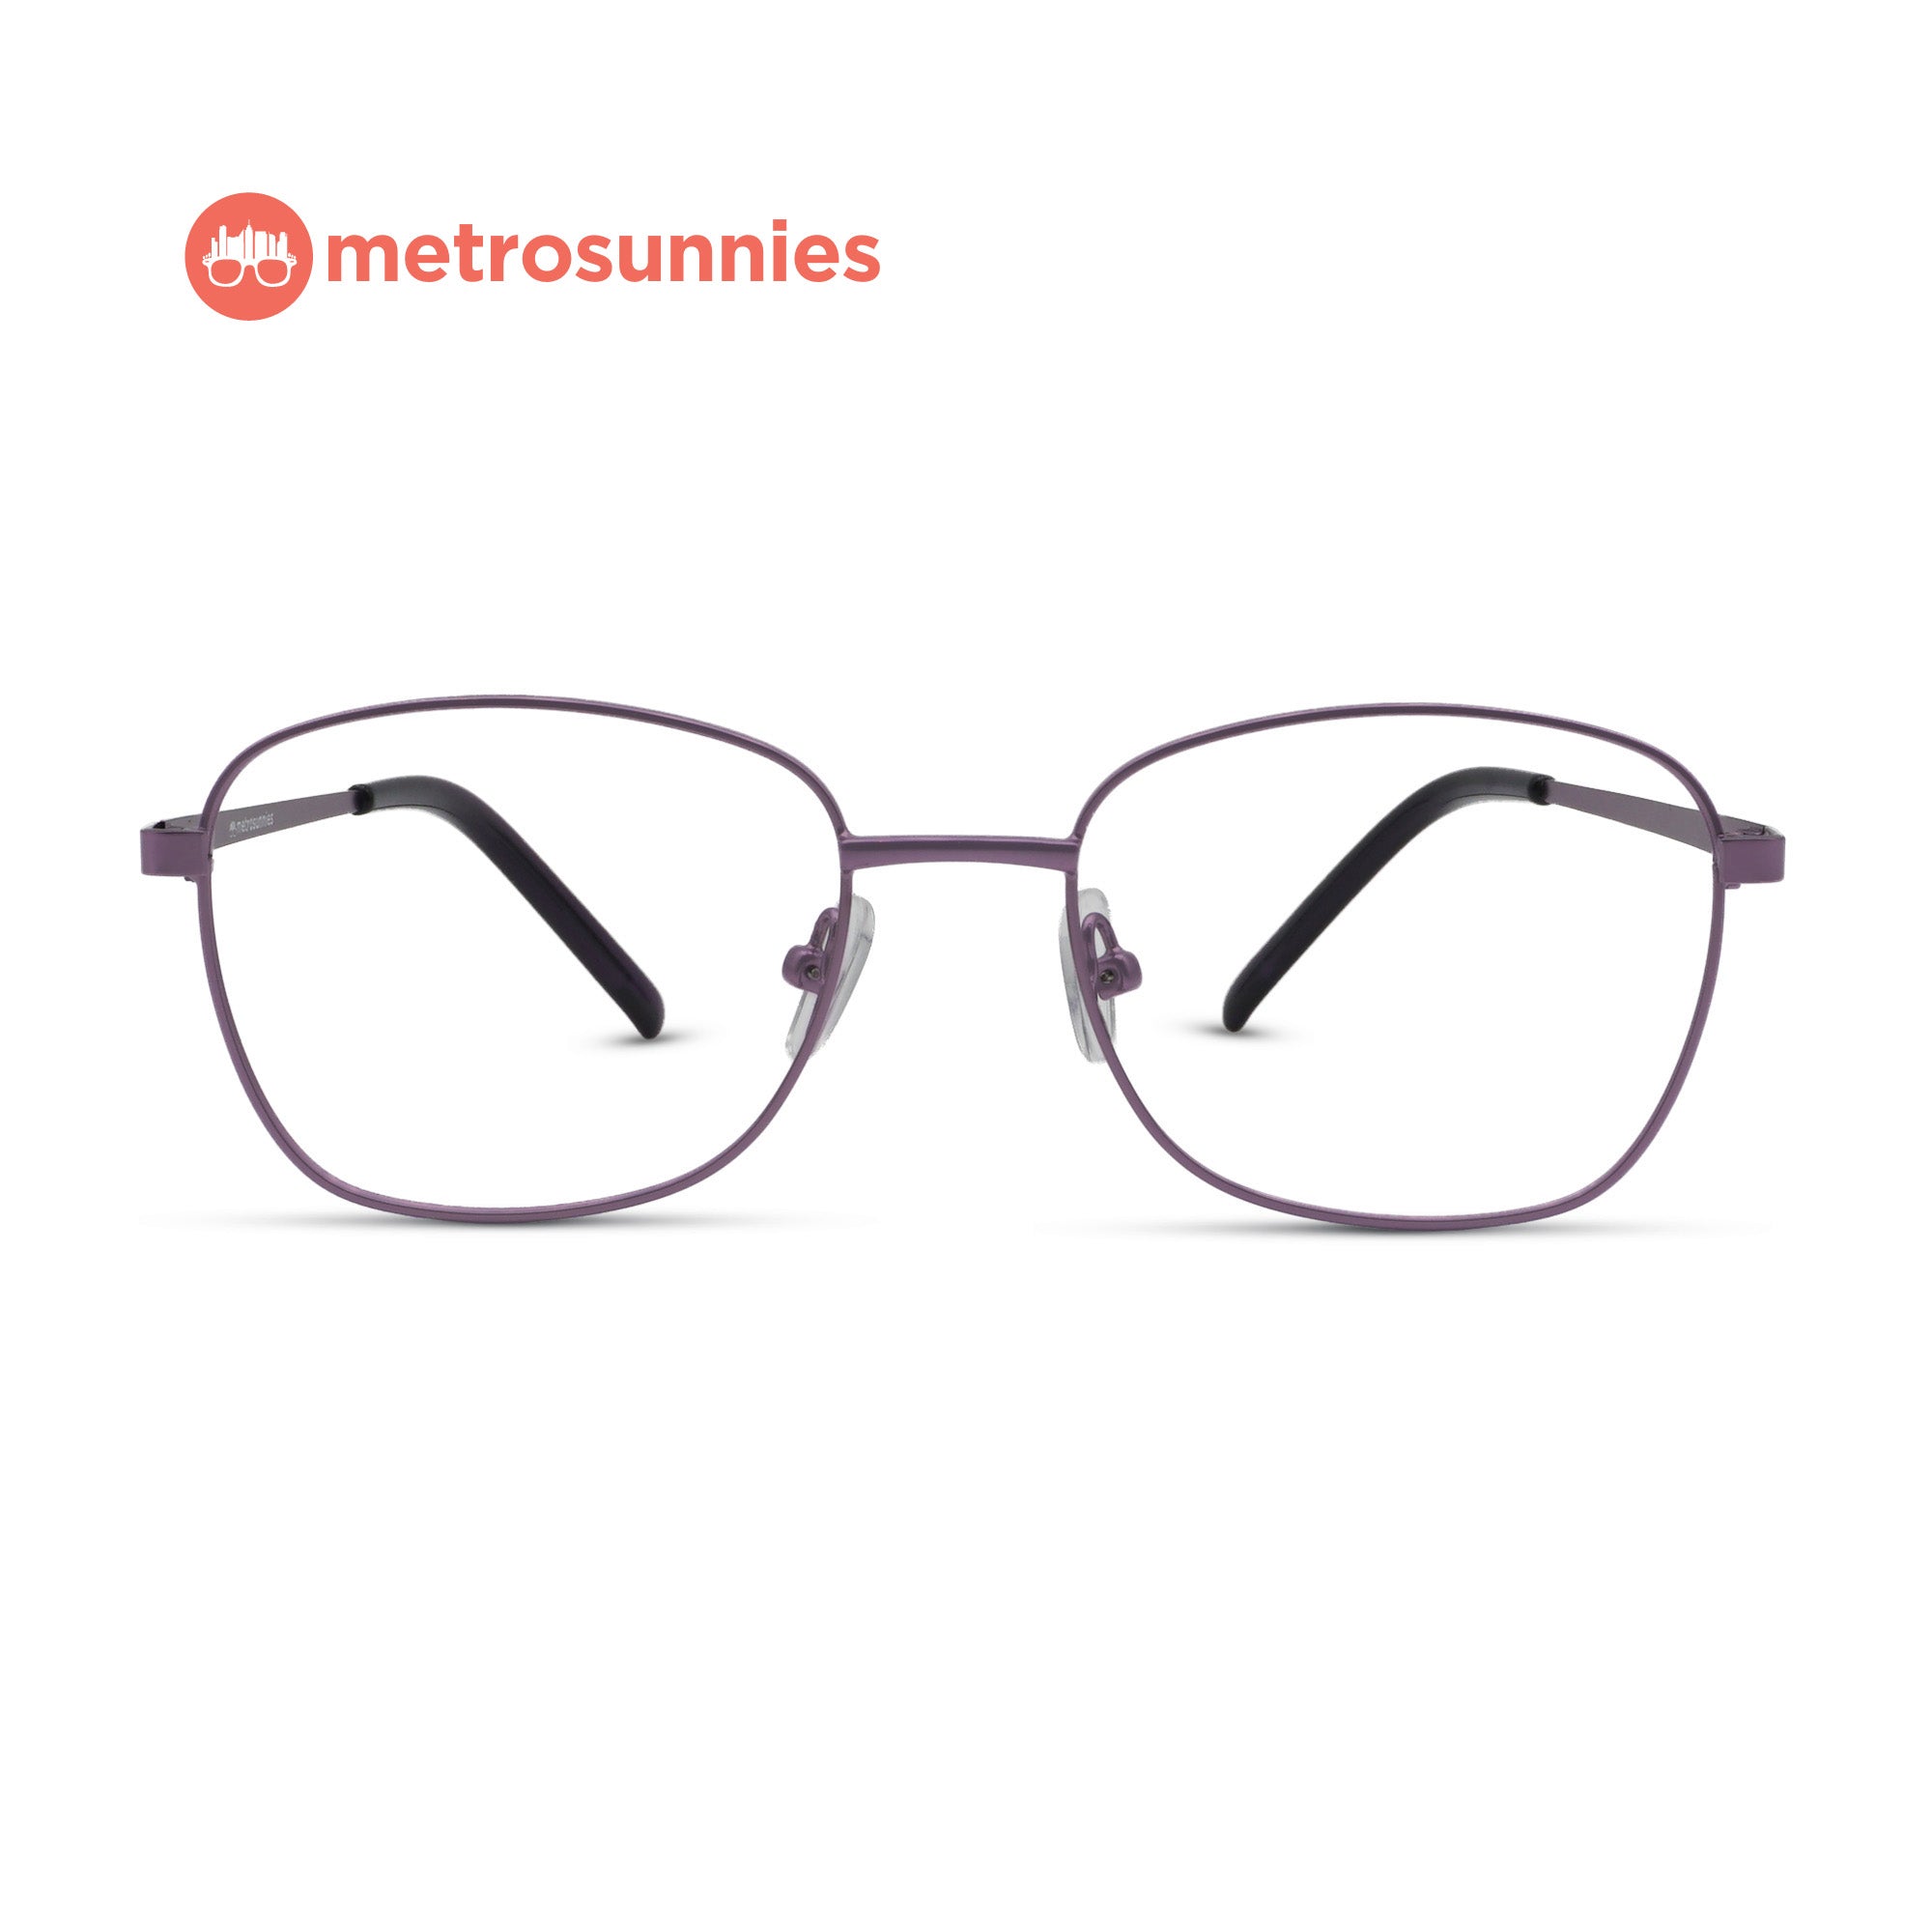 MetroSunnies Dawson Specs (Purple) / Replaceable Lens / Eyeglasses for Men and Women